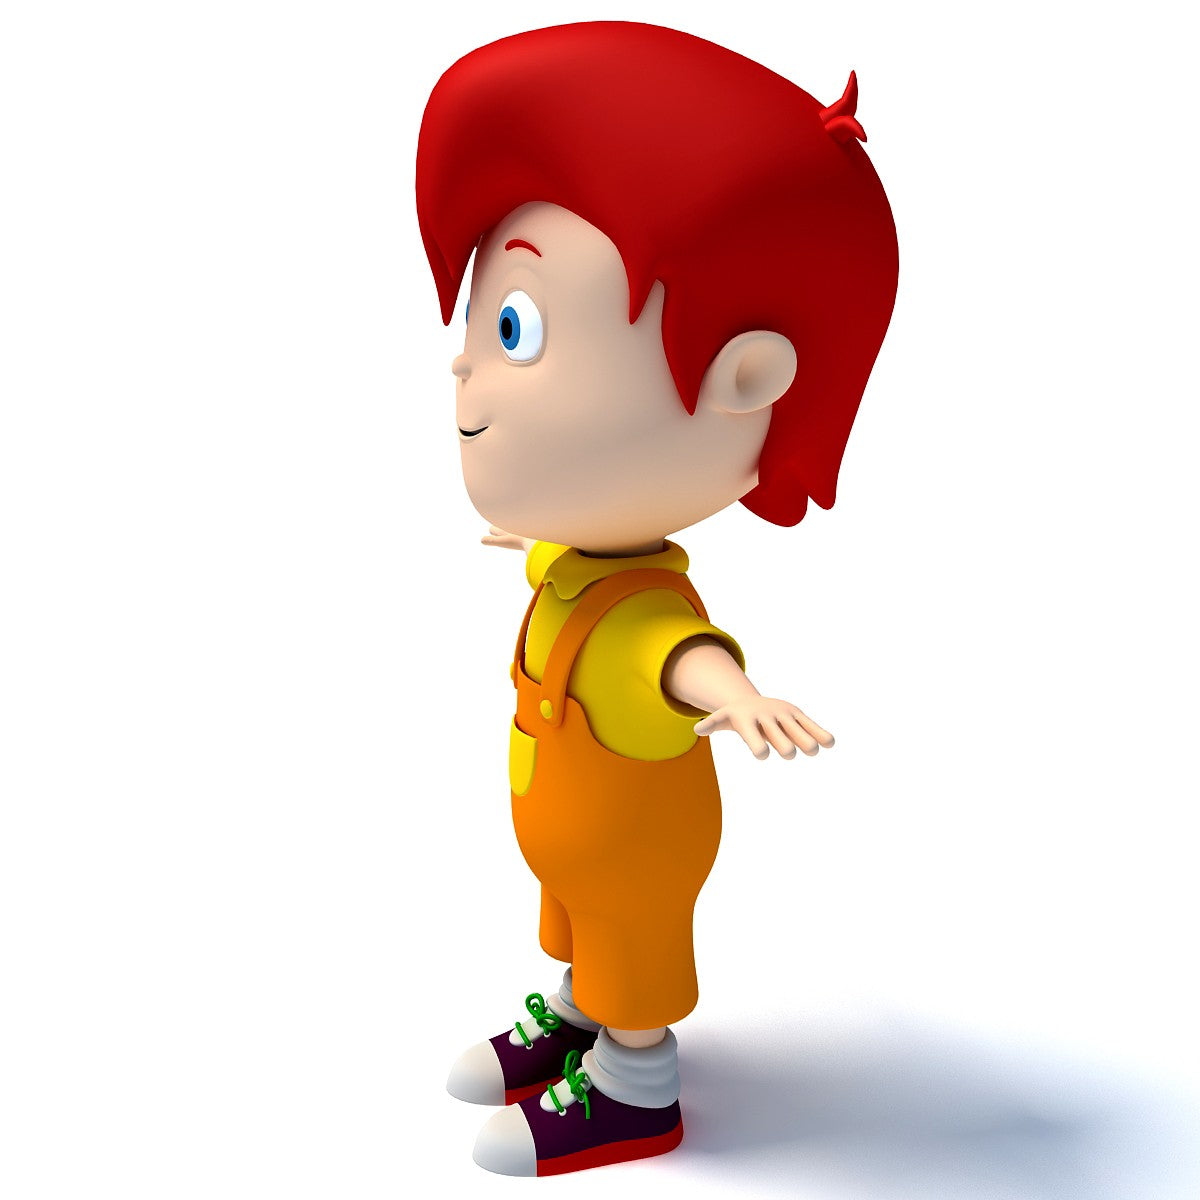 3D Cartoon Character - Rigged